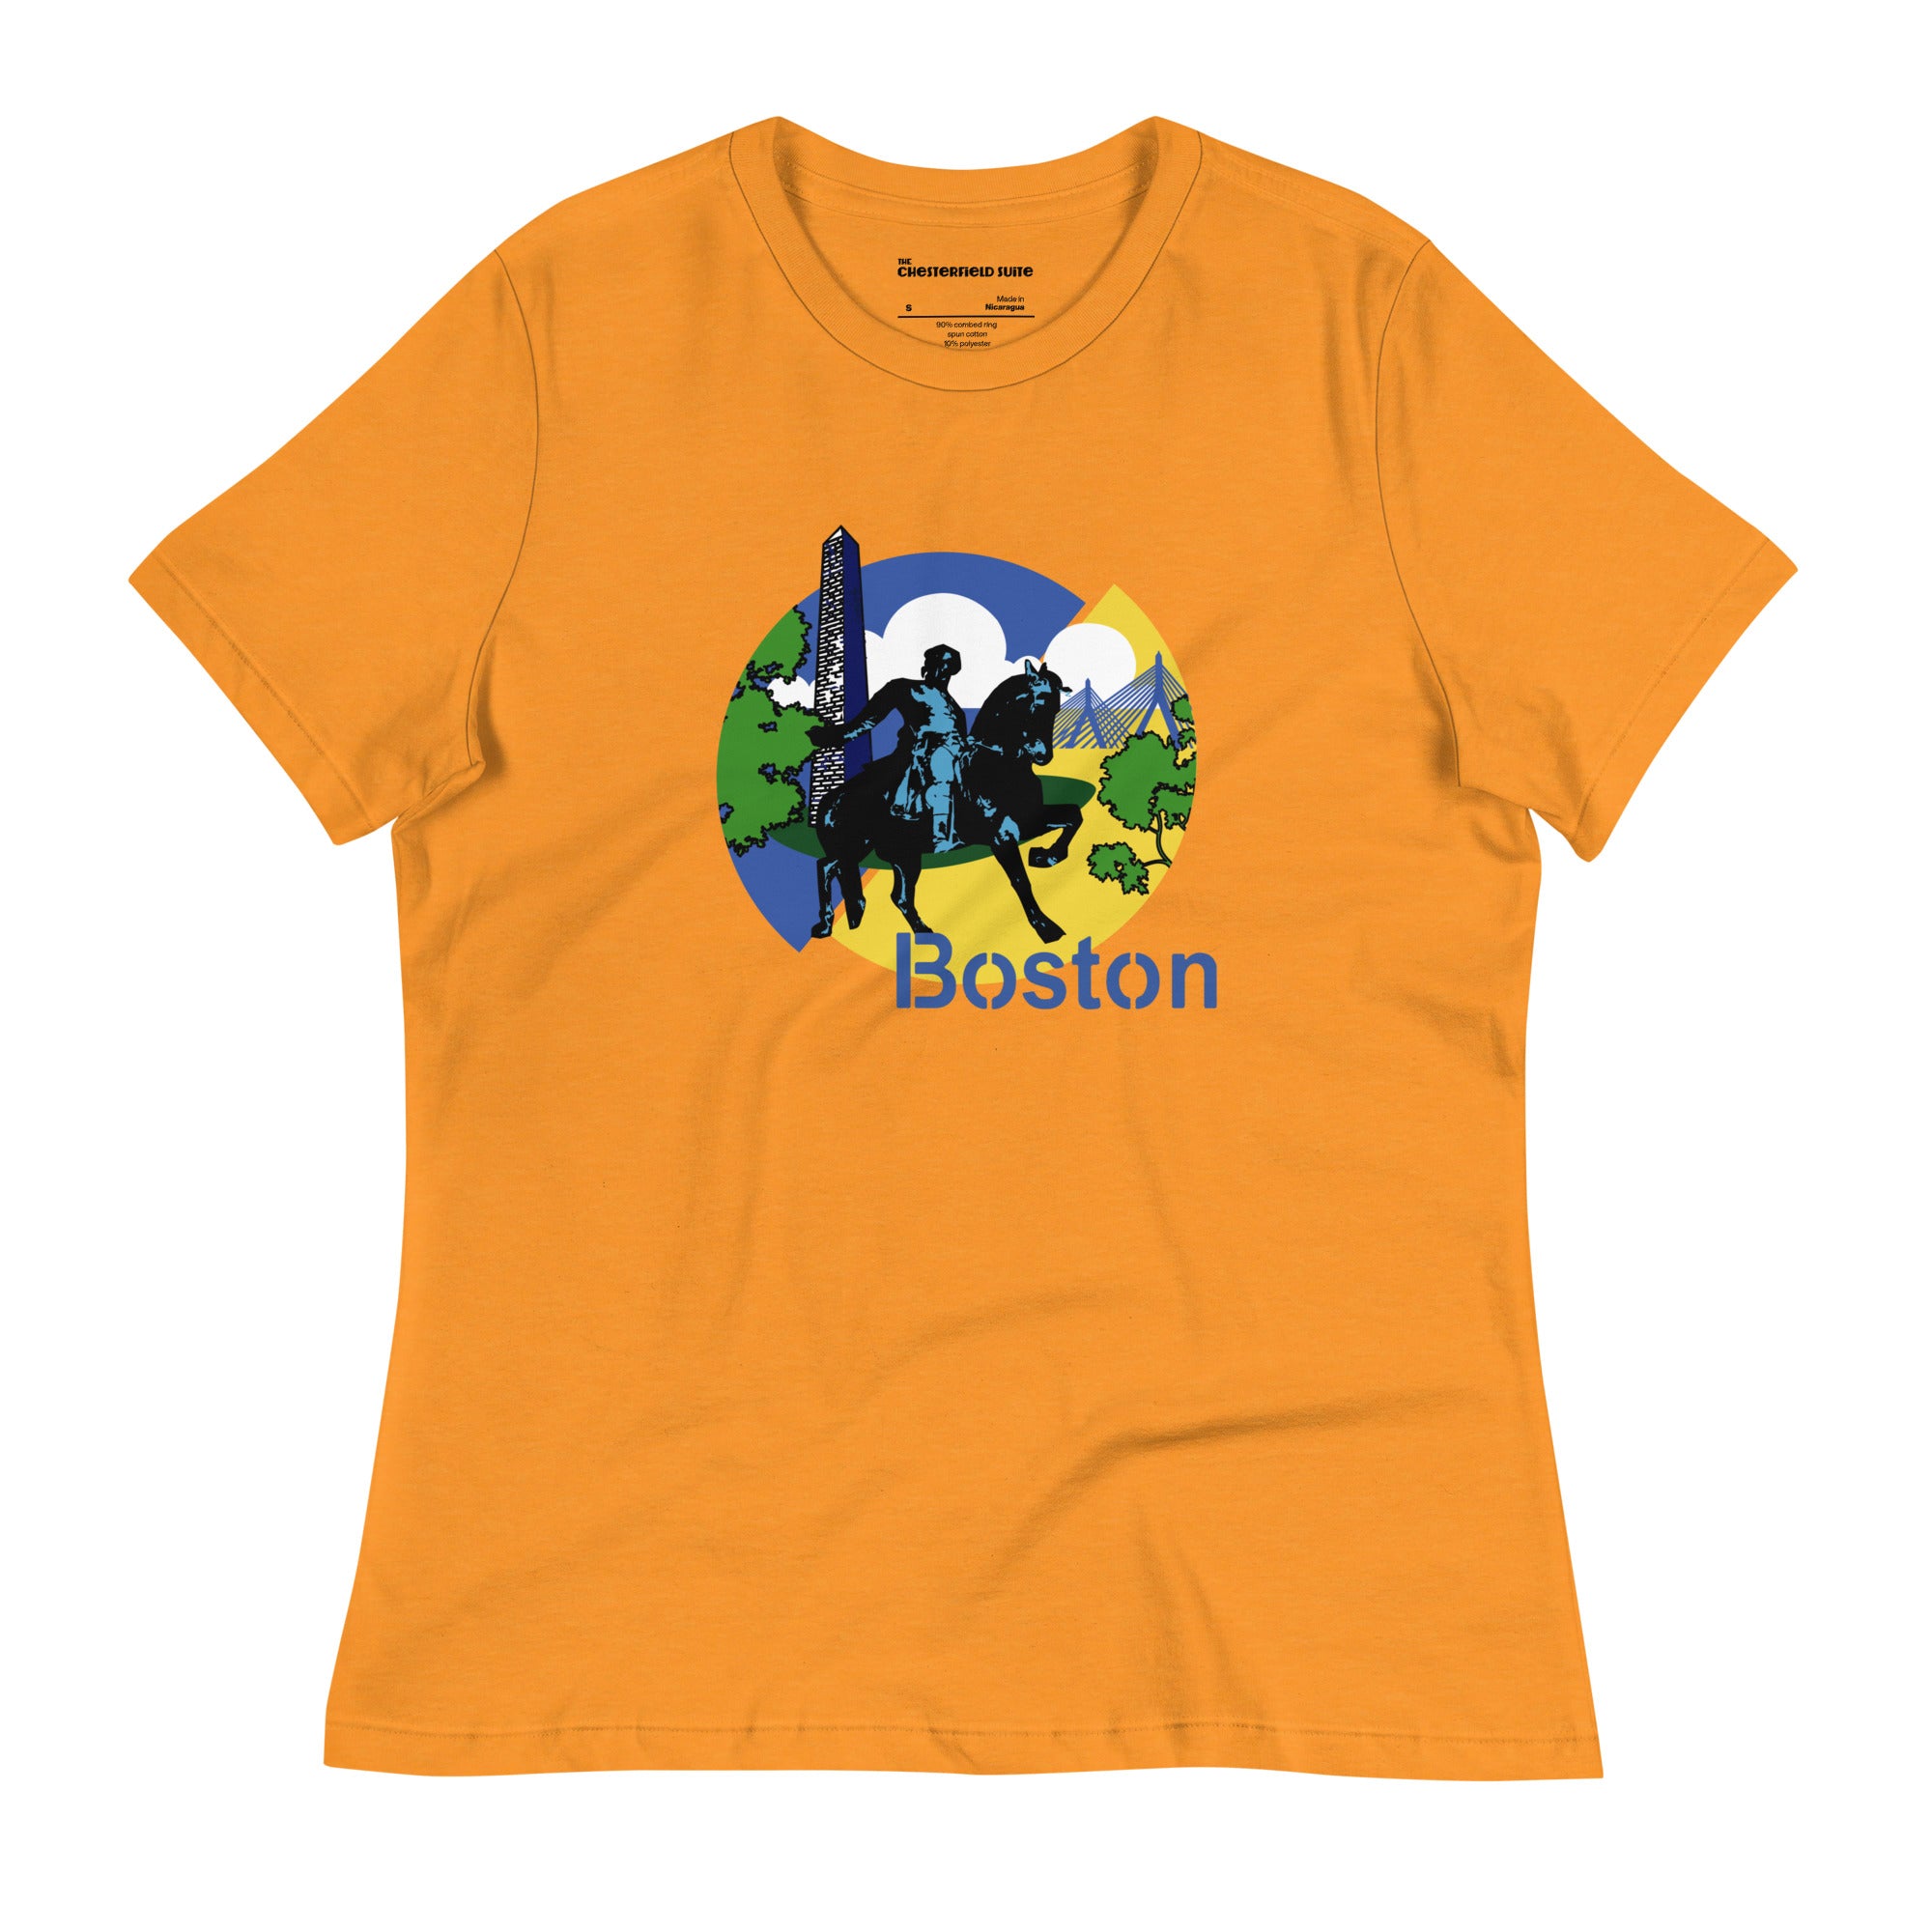 design with paul revere statue, bunker hill monument, zakim bridge boston on orange women's t-shirt